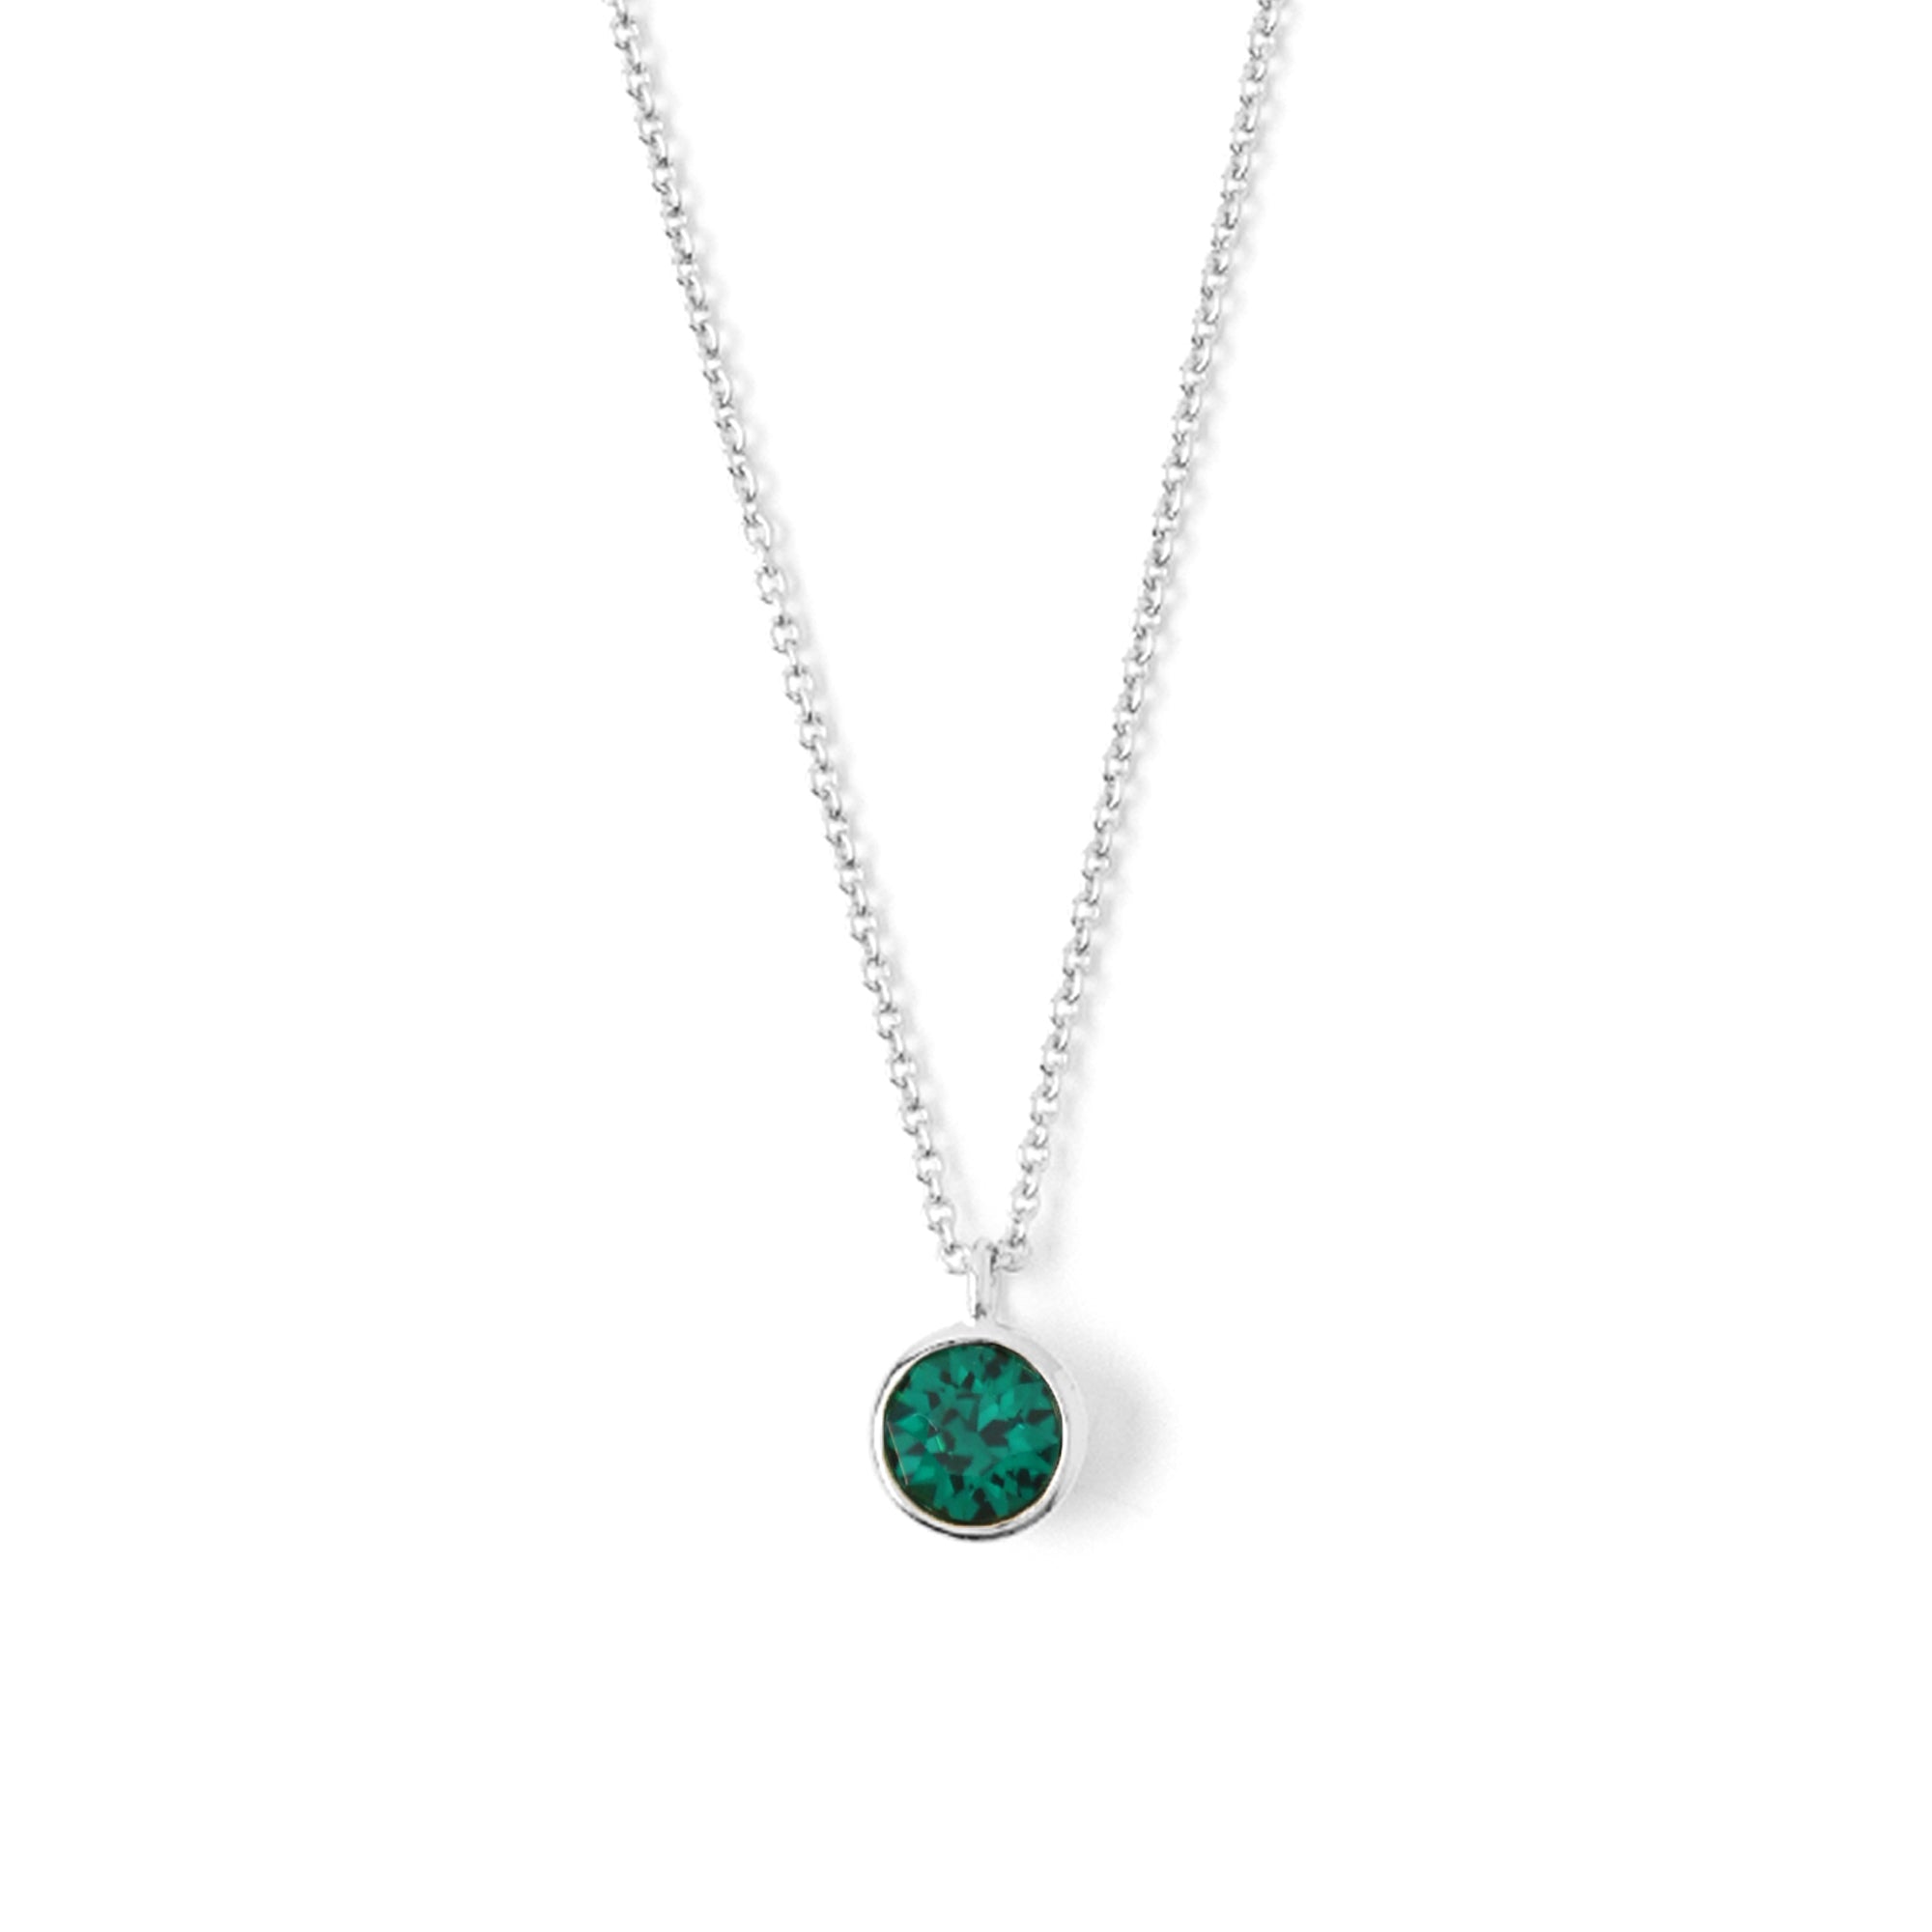 Emerald Necklace Made With Swarovski Crystals - Silver - Orelia London